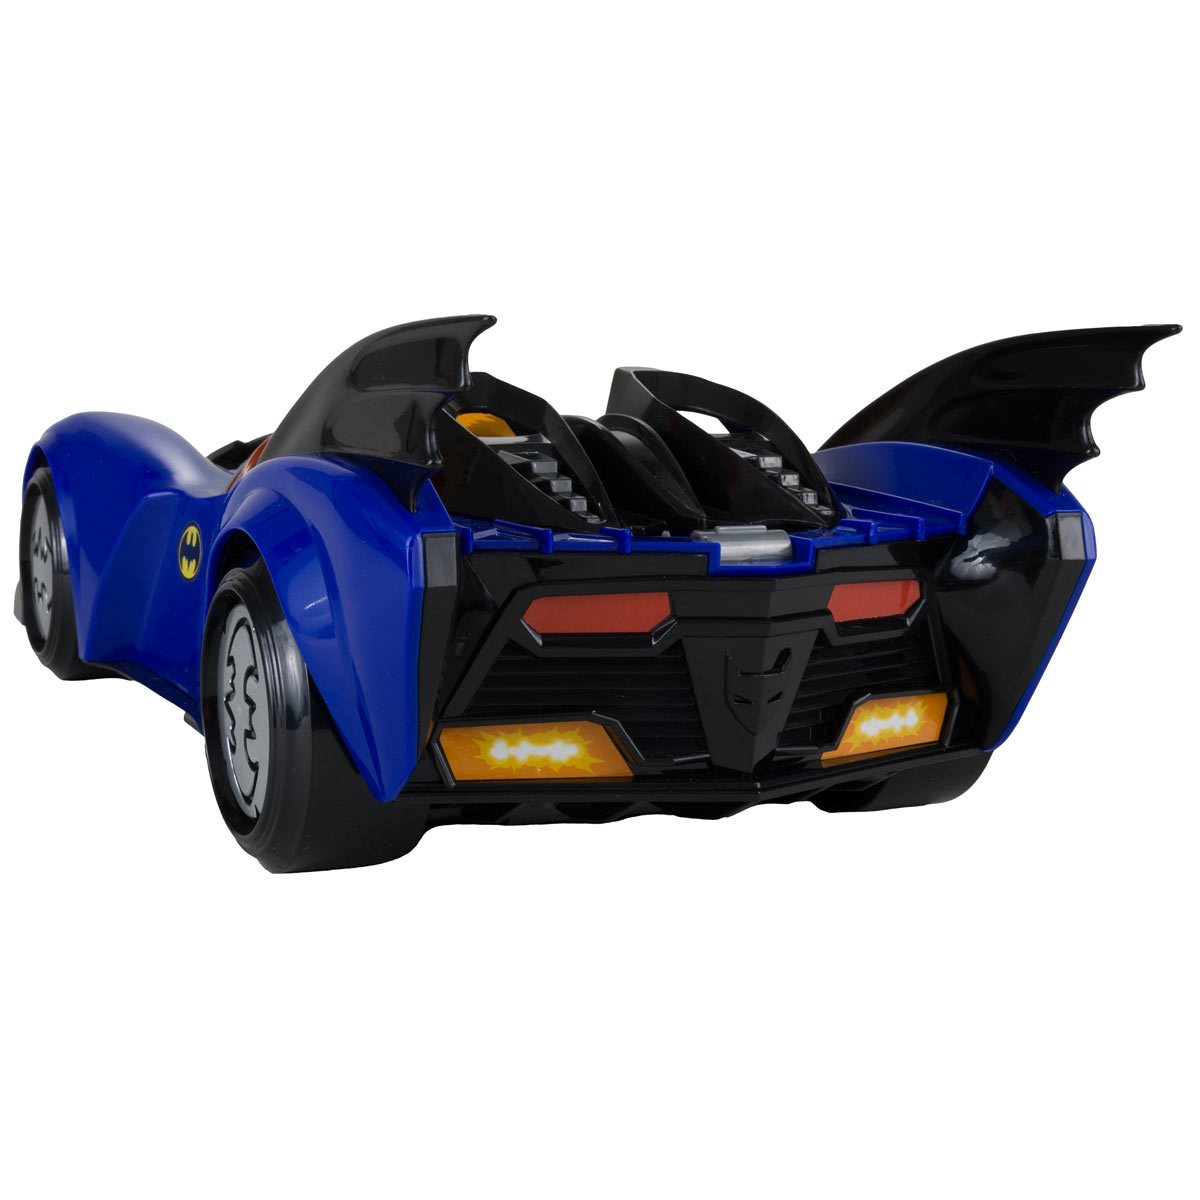 DC Super Powers The Batmobile Vehicle